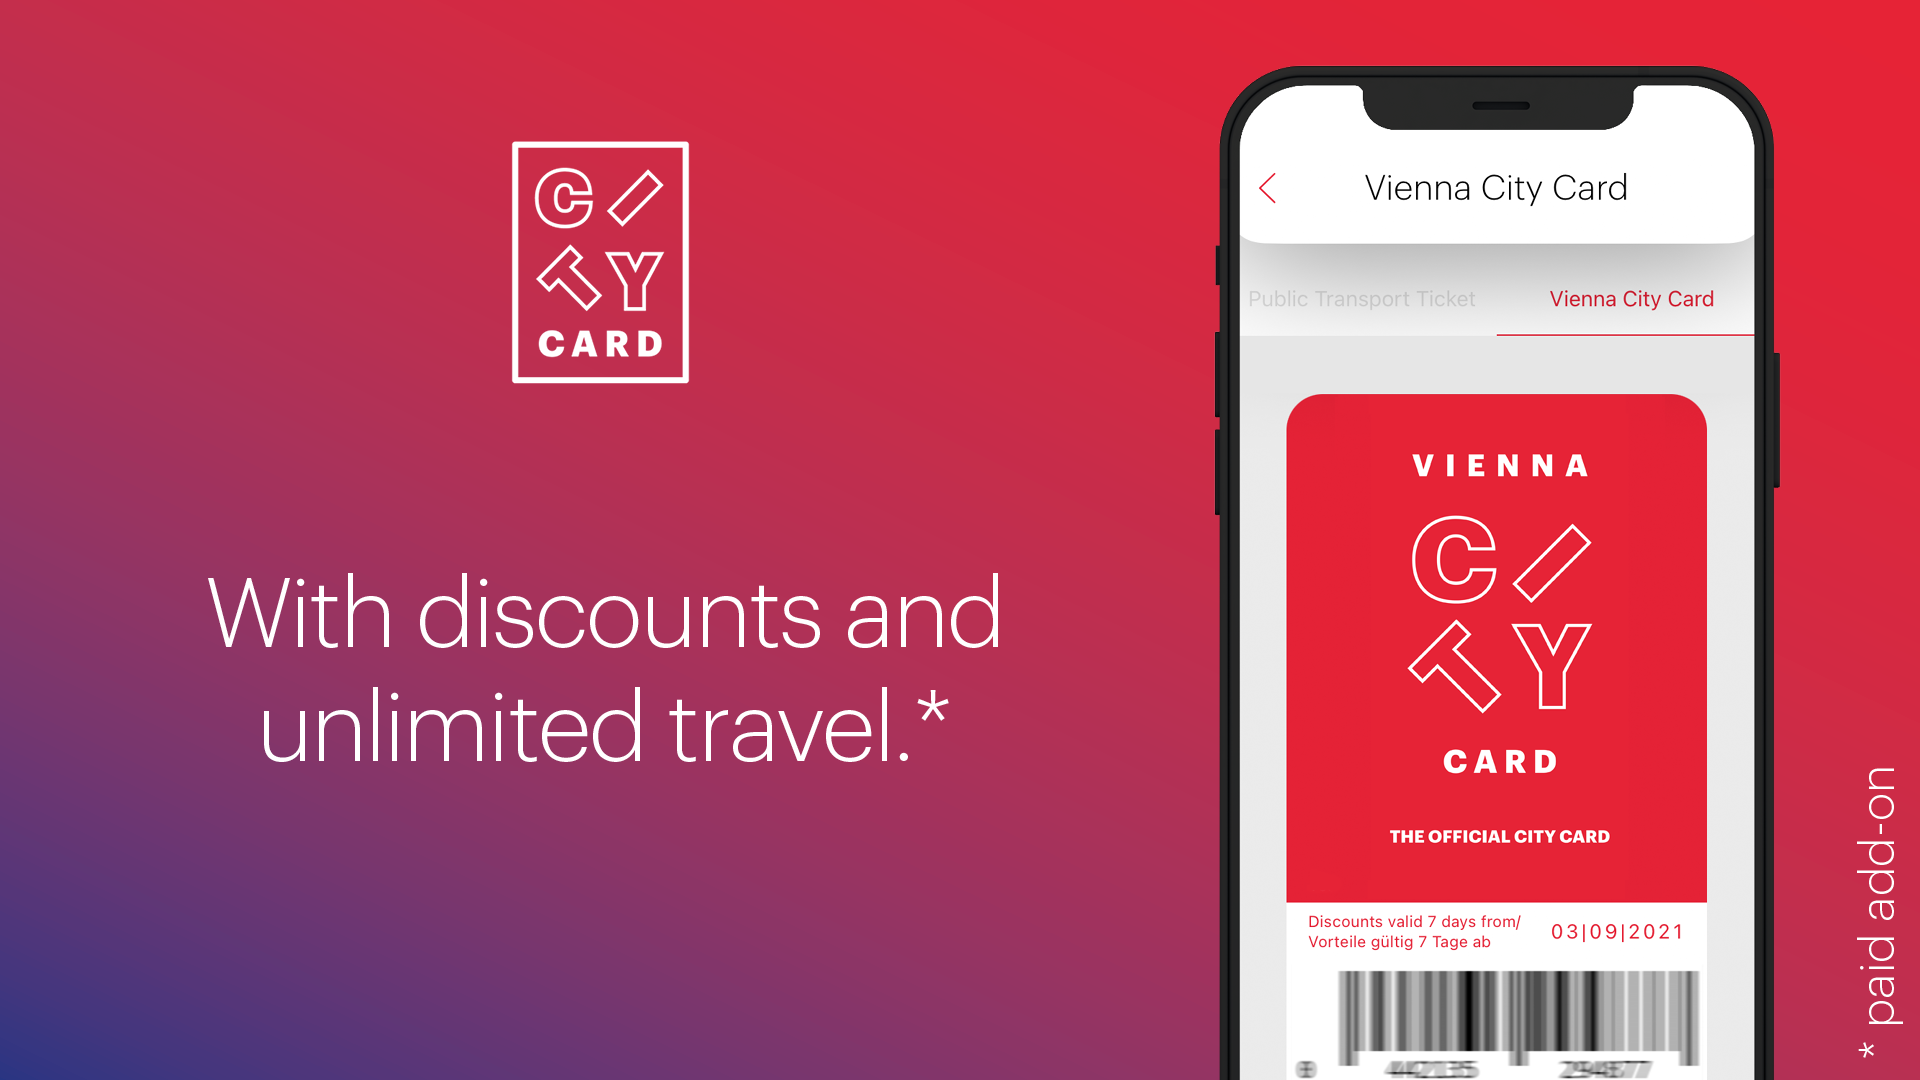 ivie City Guide App – Vienna City Card